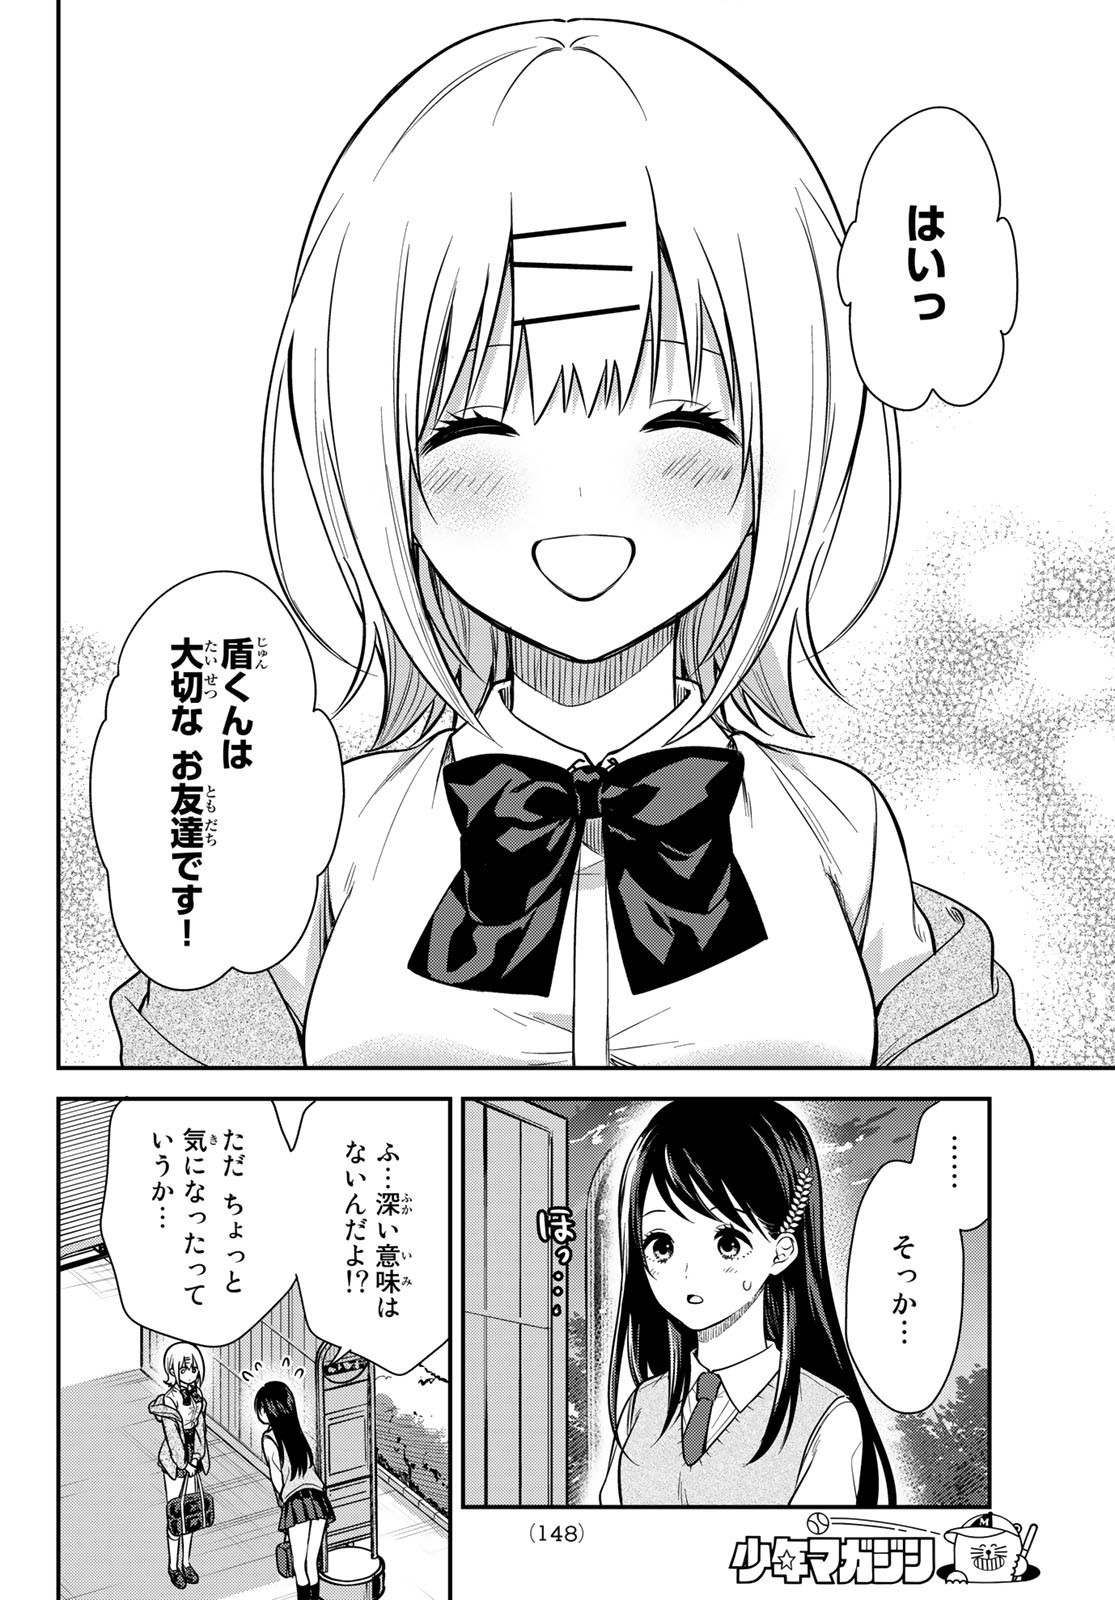 Kimi ga Megami Nara Ii no ni (I Wish You Were My Muse) - Chapter 004 - Page 4